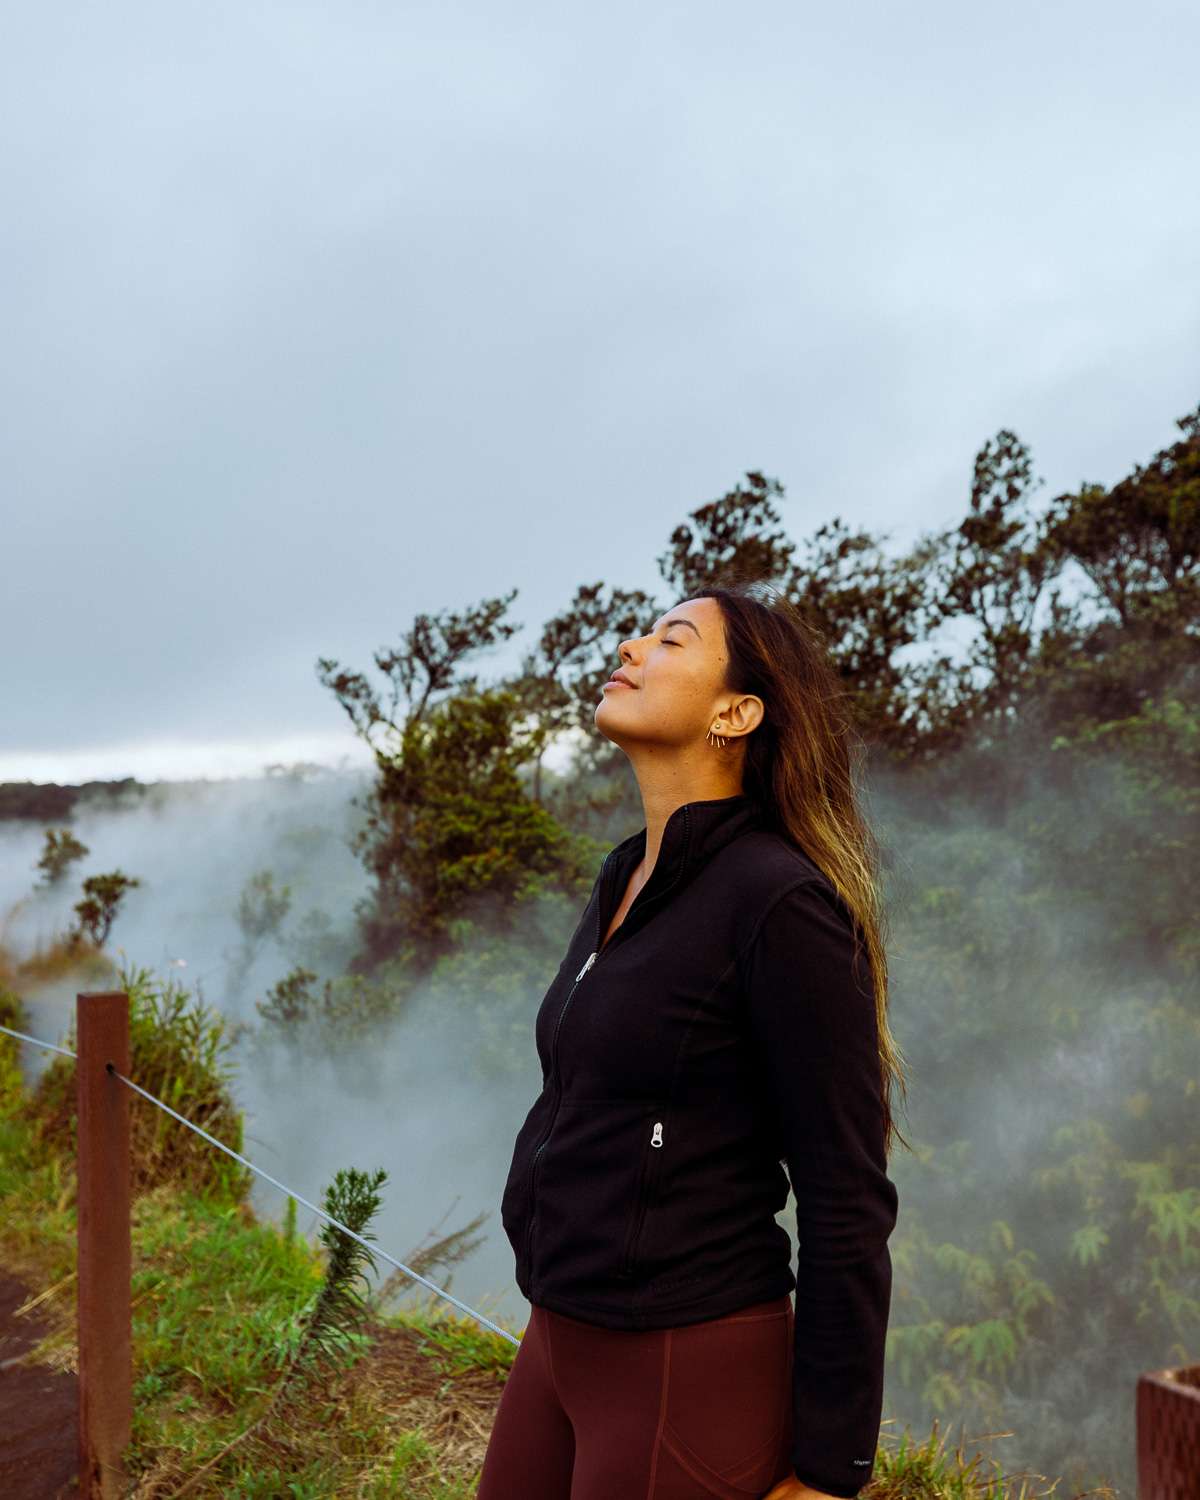 Rachel Off Duty: Hawaii Volcanoes National Park in One Day